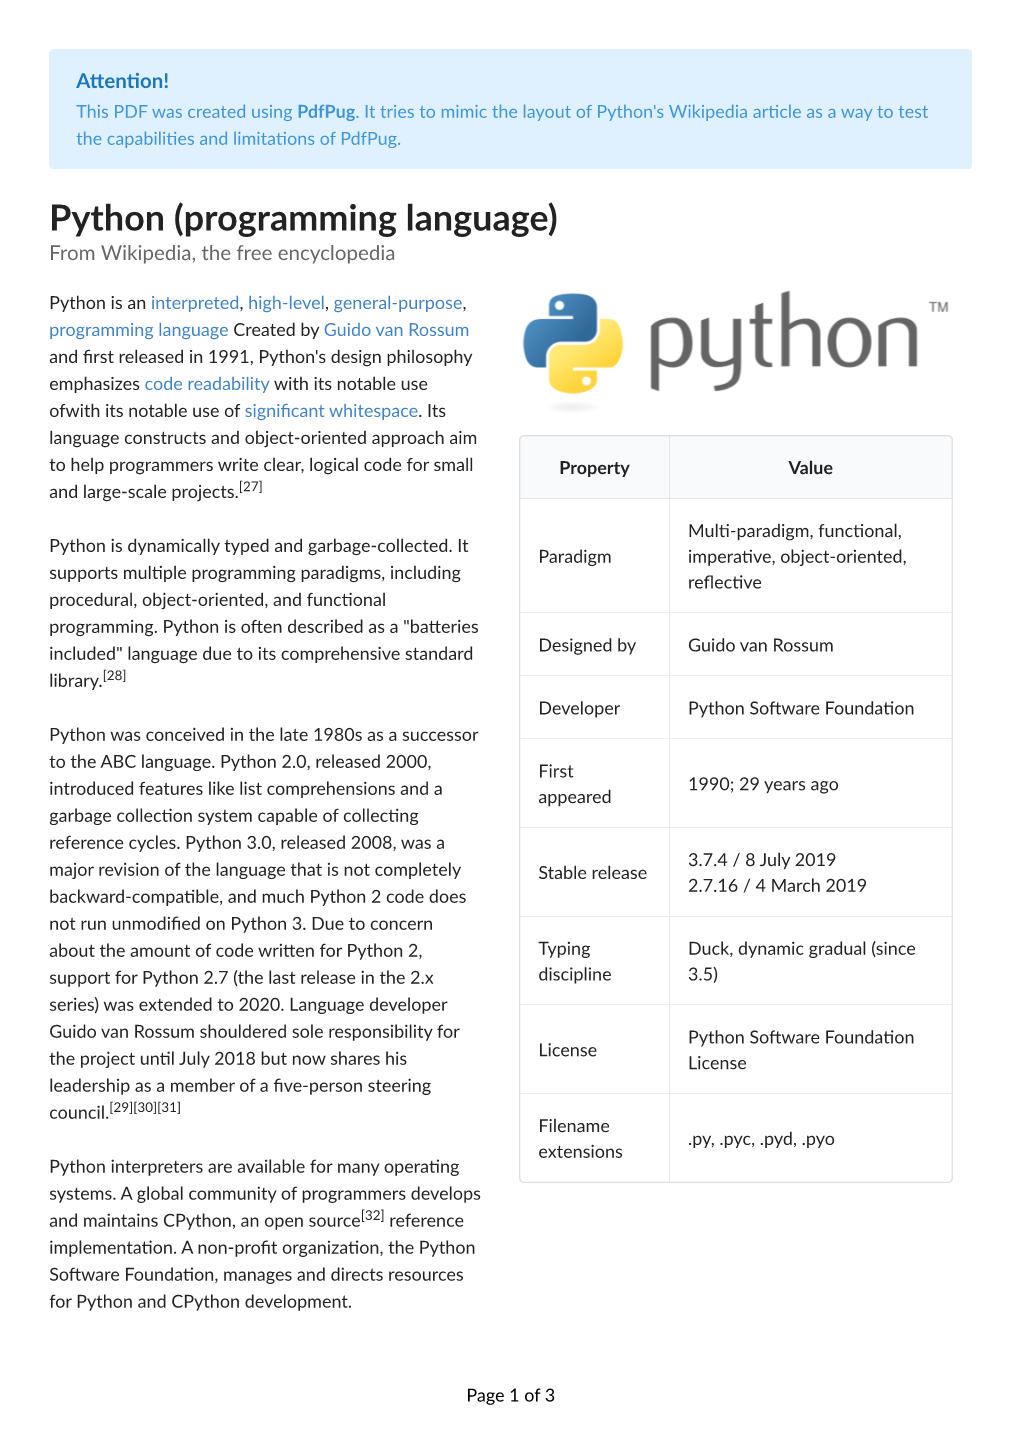 Python (Programming Language) from Wikipedia, the Free Encyclopedia